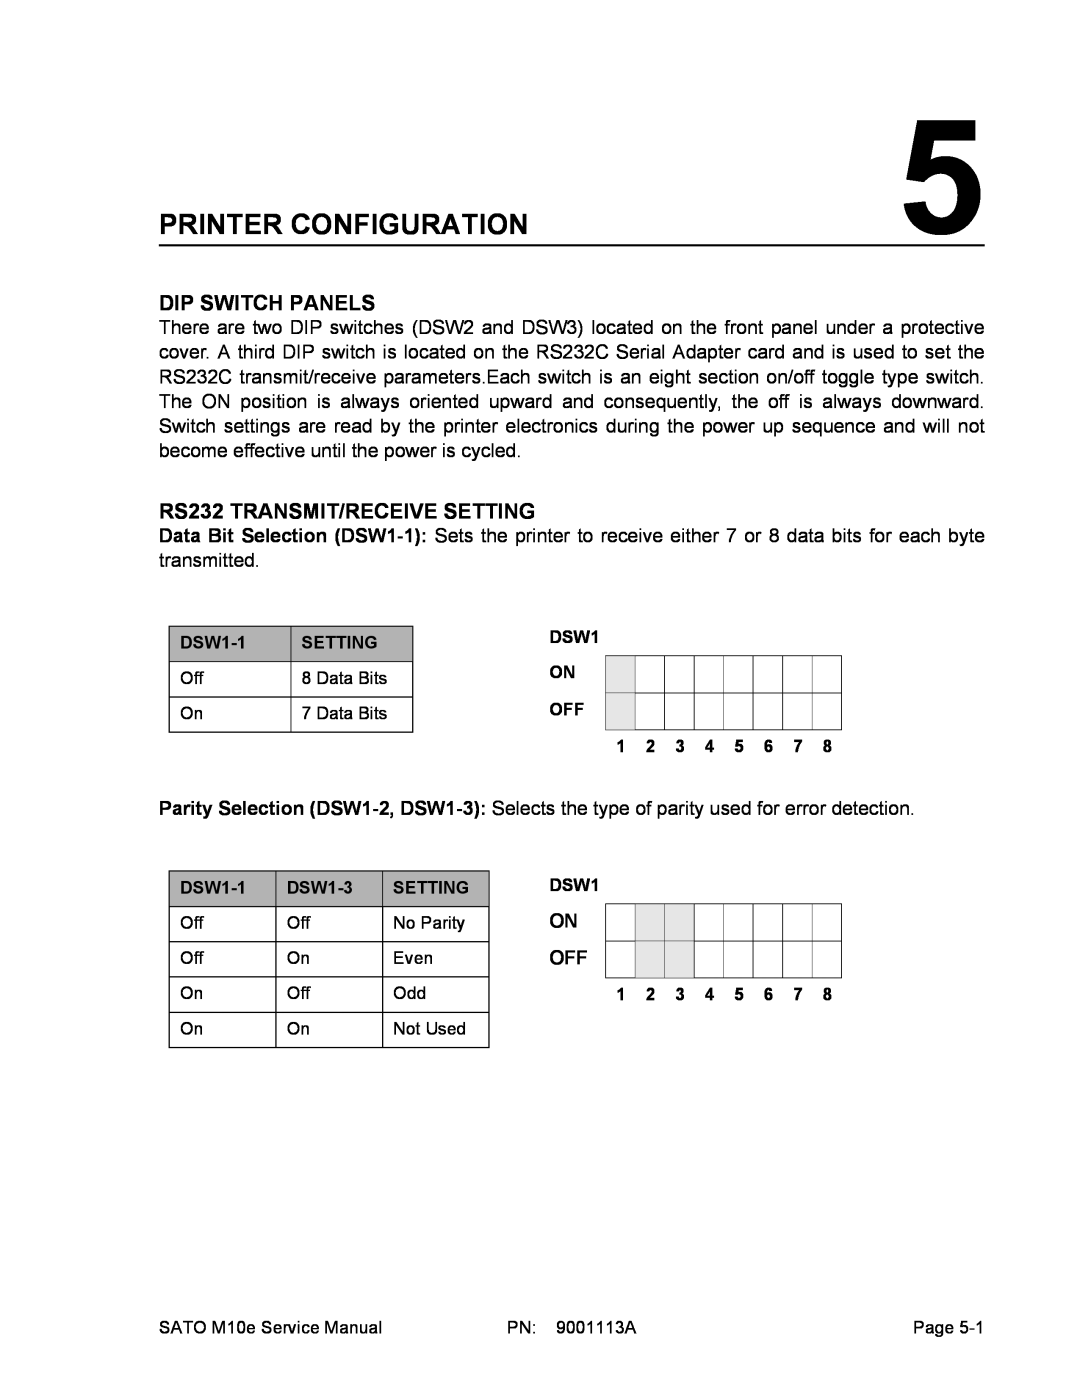 SATO 10e service manual Printer Configuration, Dip Switch Panels, RS232 TRANSMIT/RECEIVE SETTING 